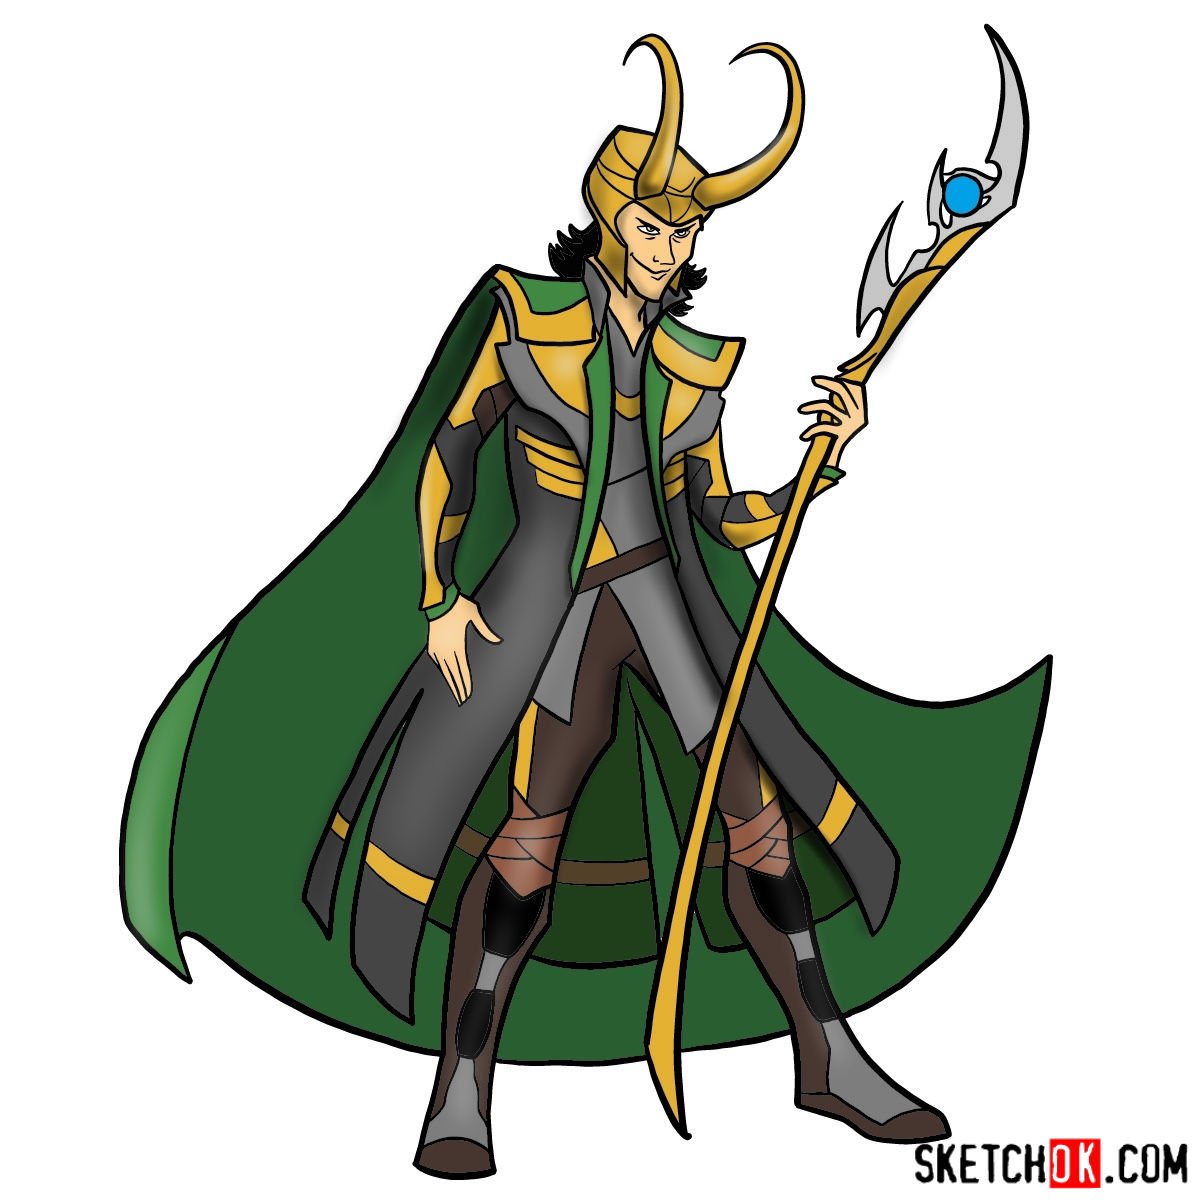 How to draw Loki – Marvel Comics villain